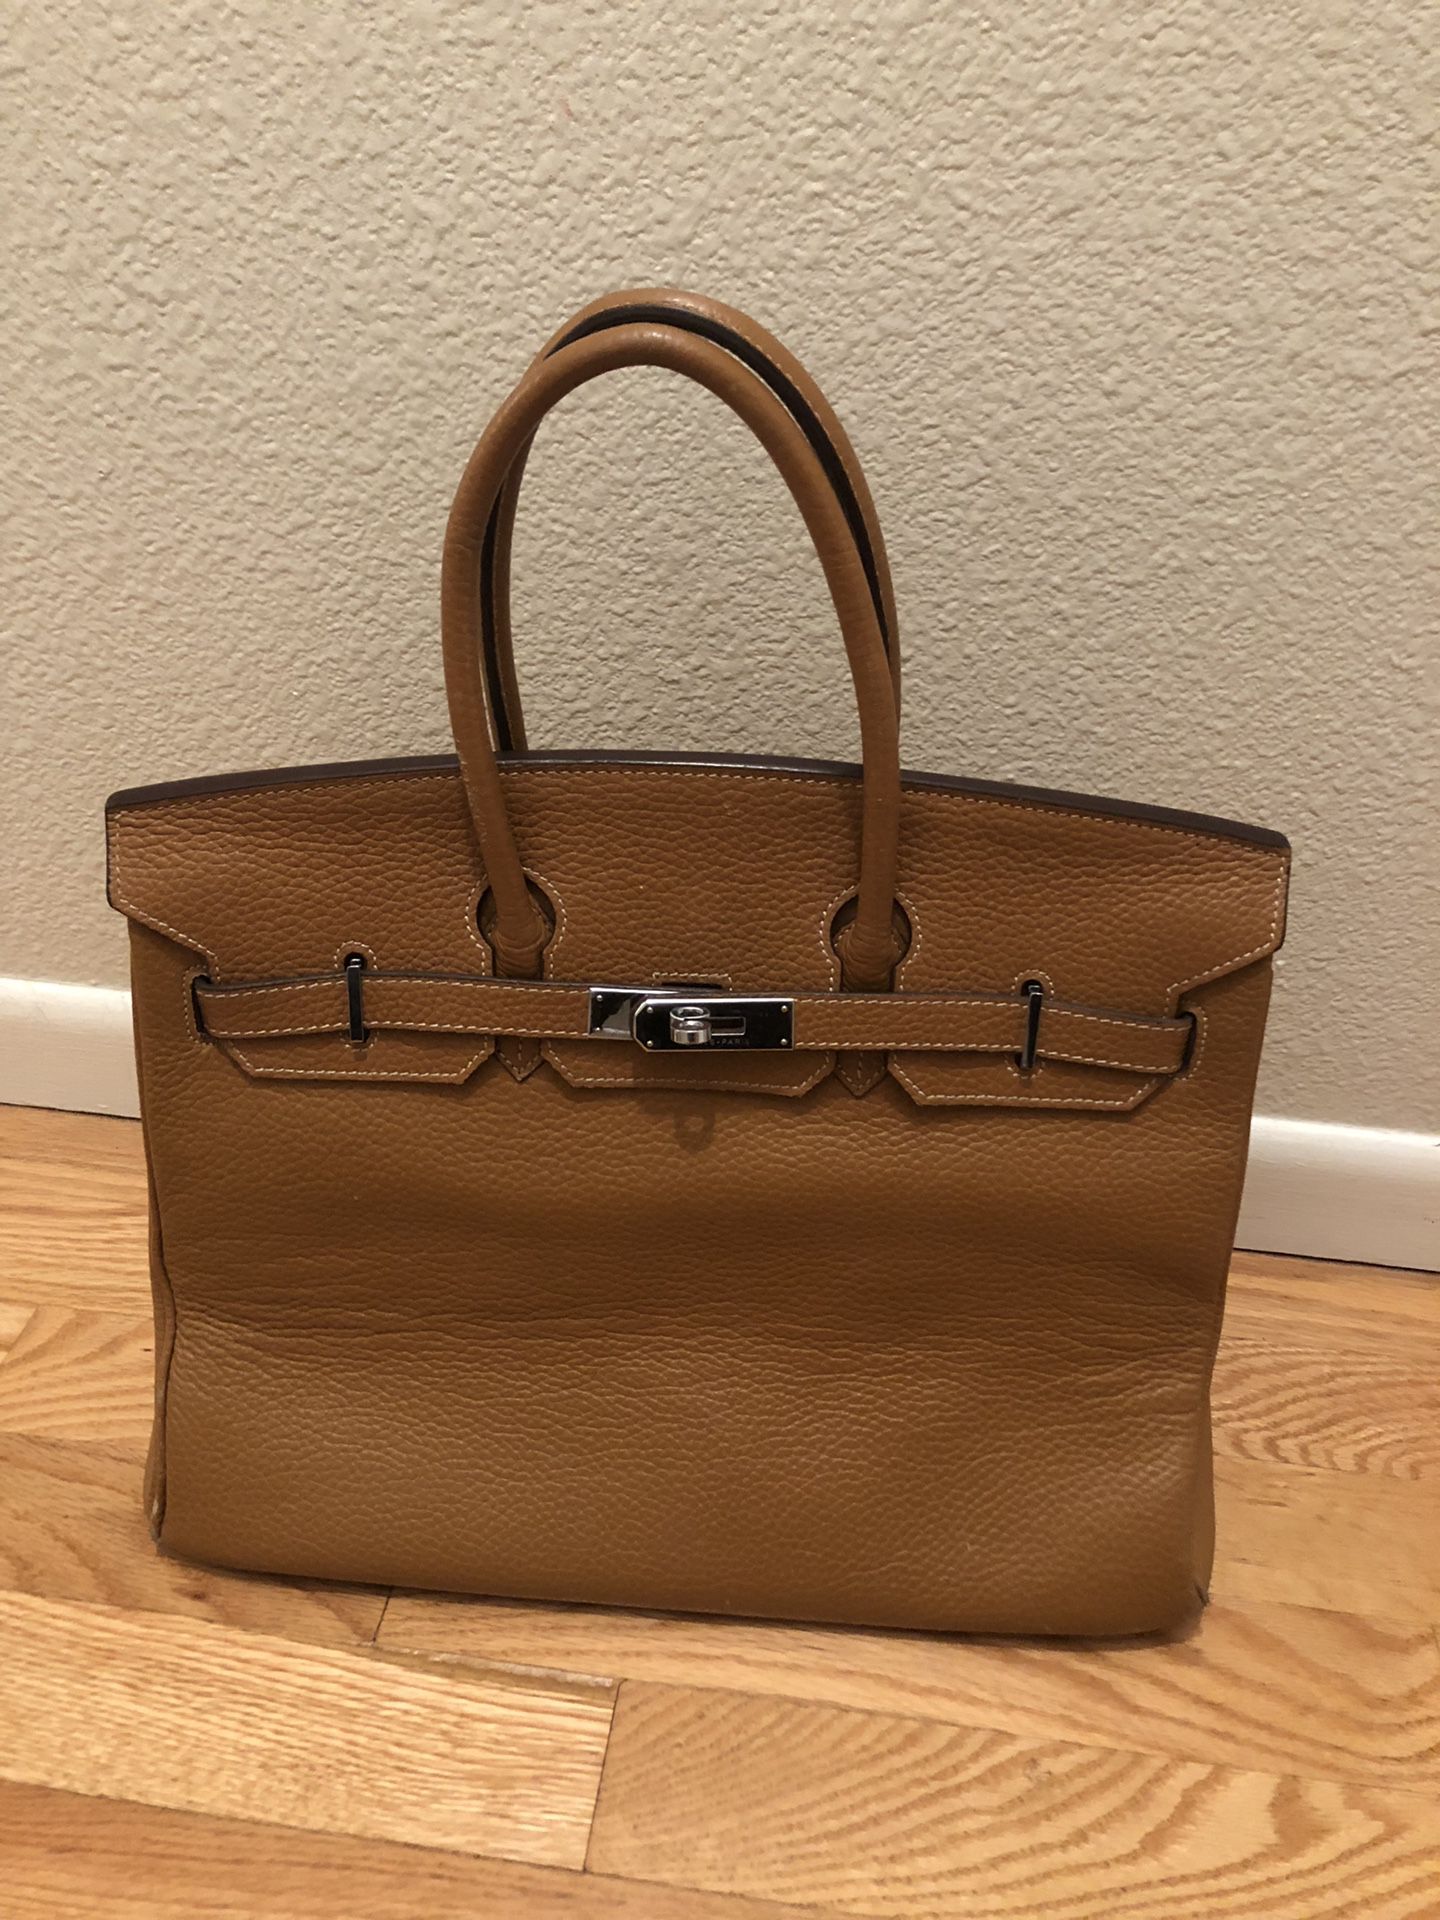 Hermès Birkin Bag with Sterling Silver Hardware